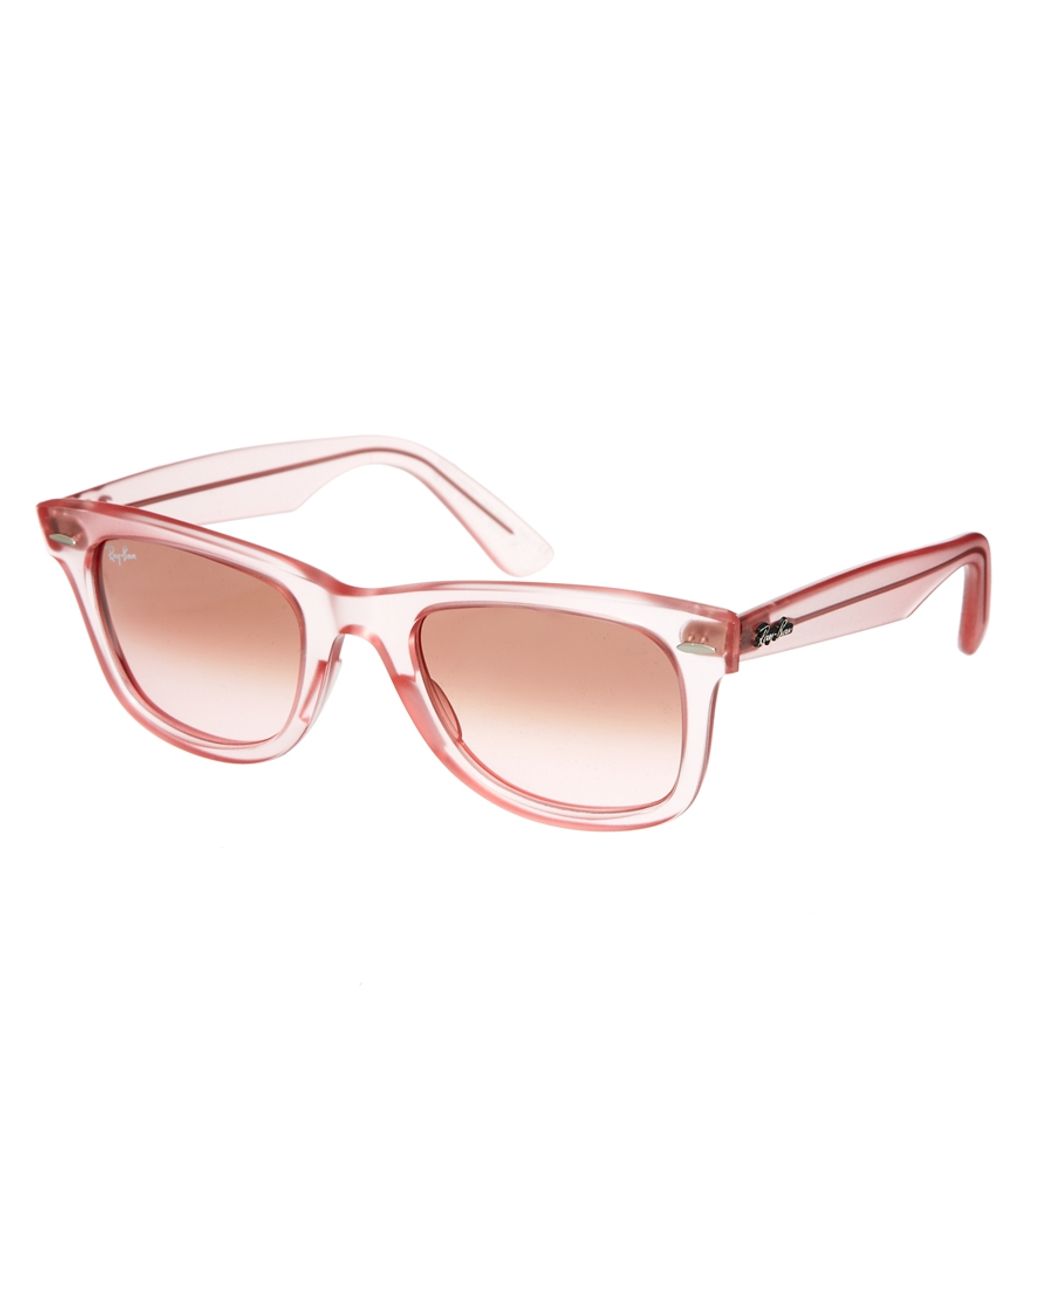 Ray-Ban Pink Wayfarer Sunglasses | Lyst